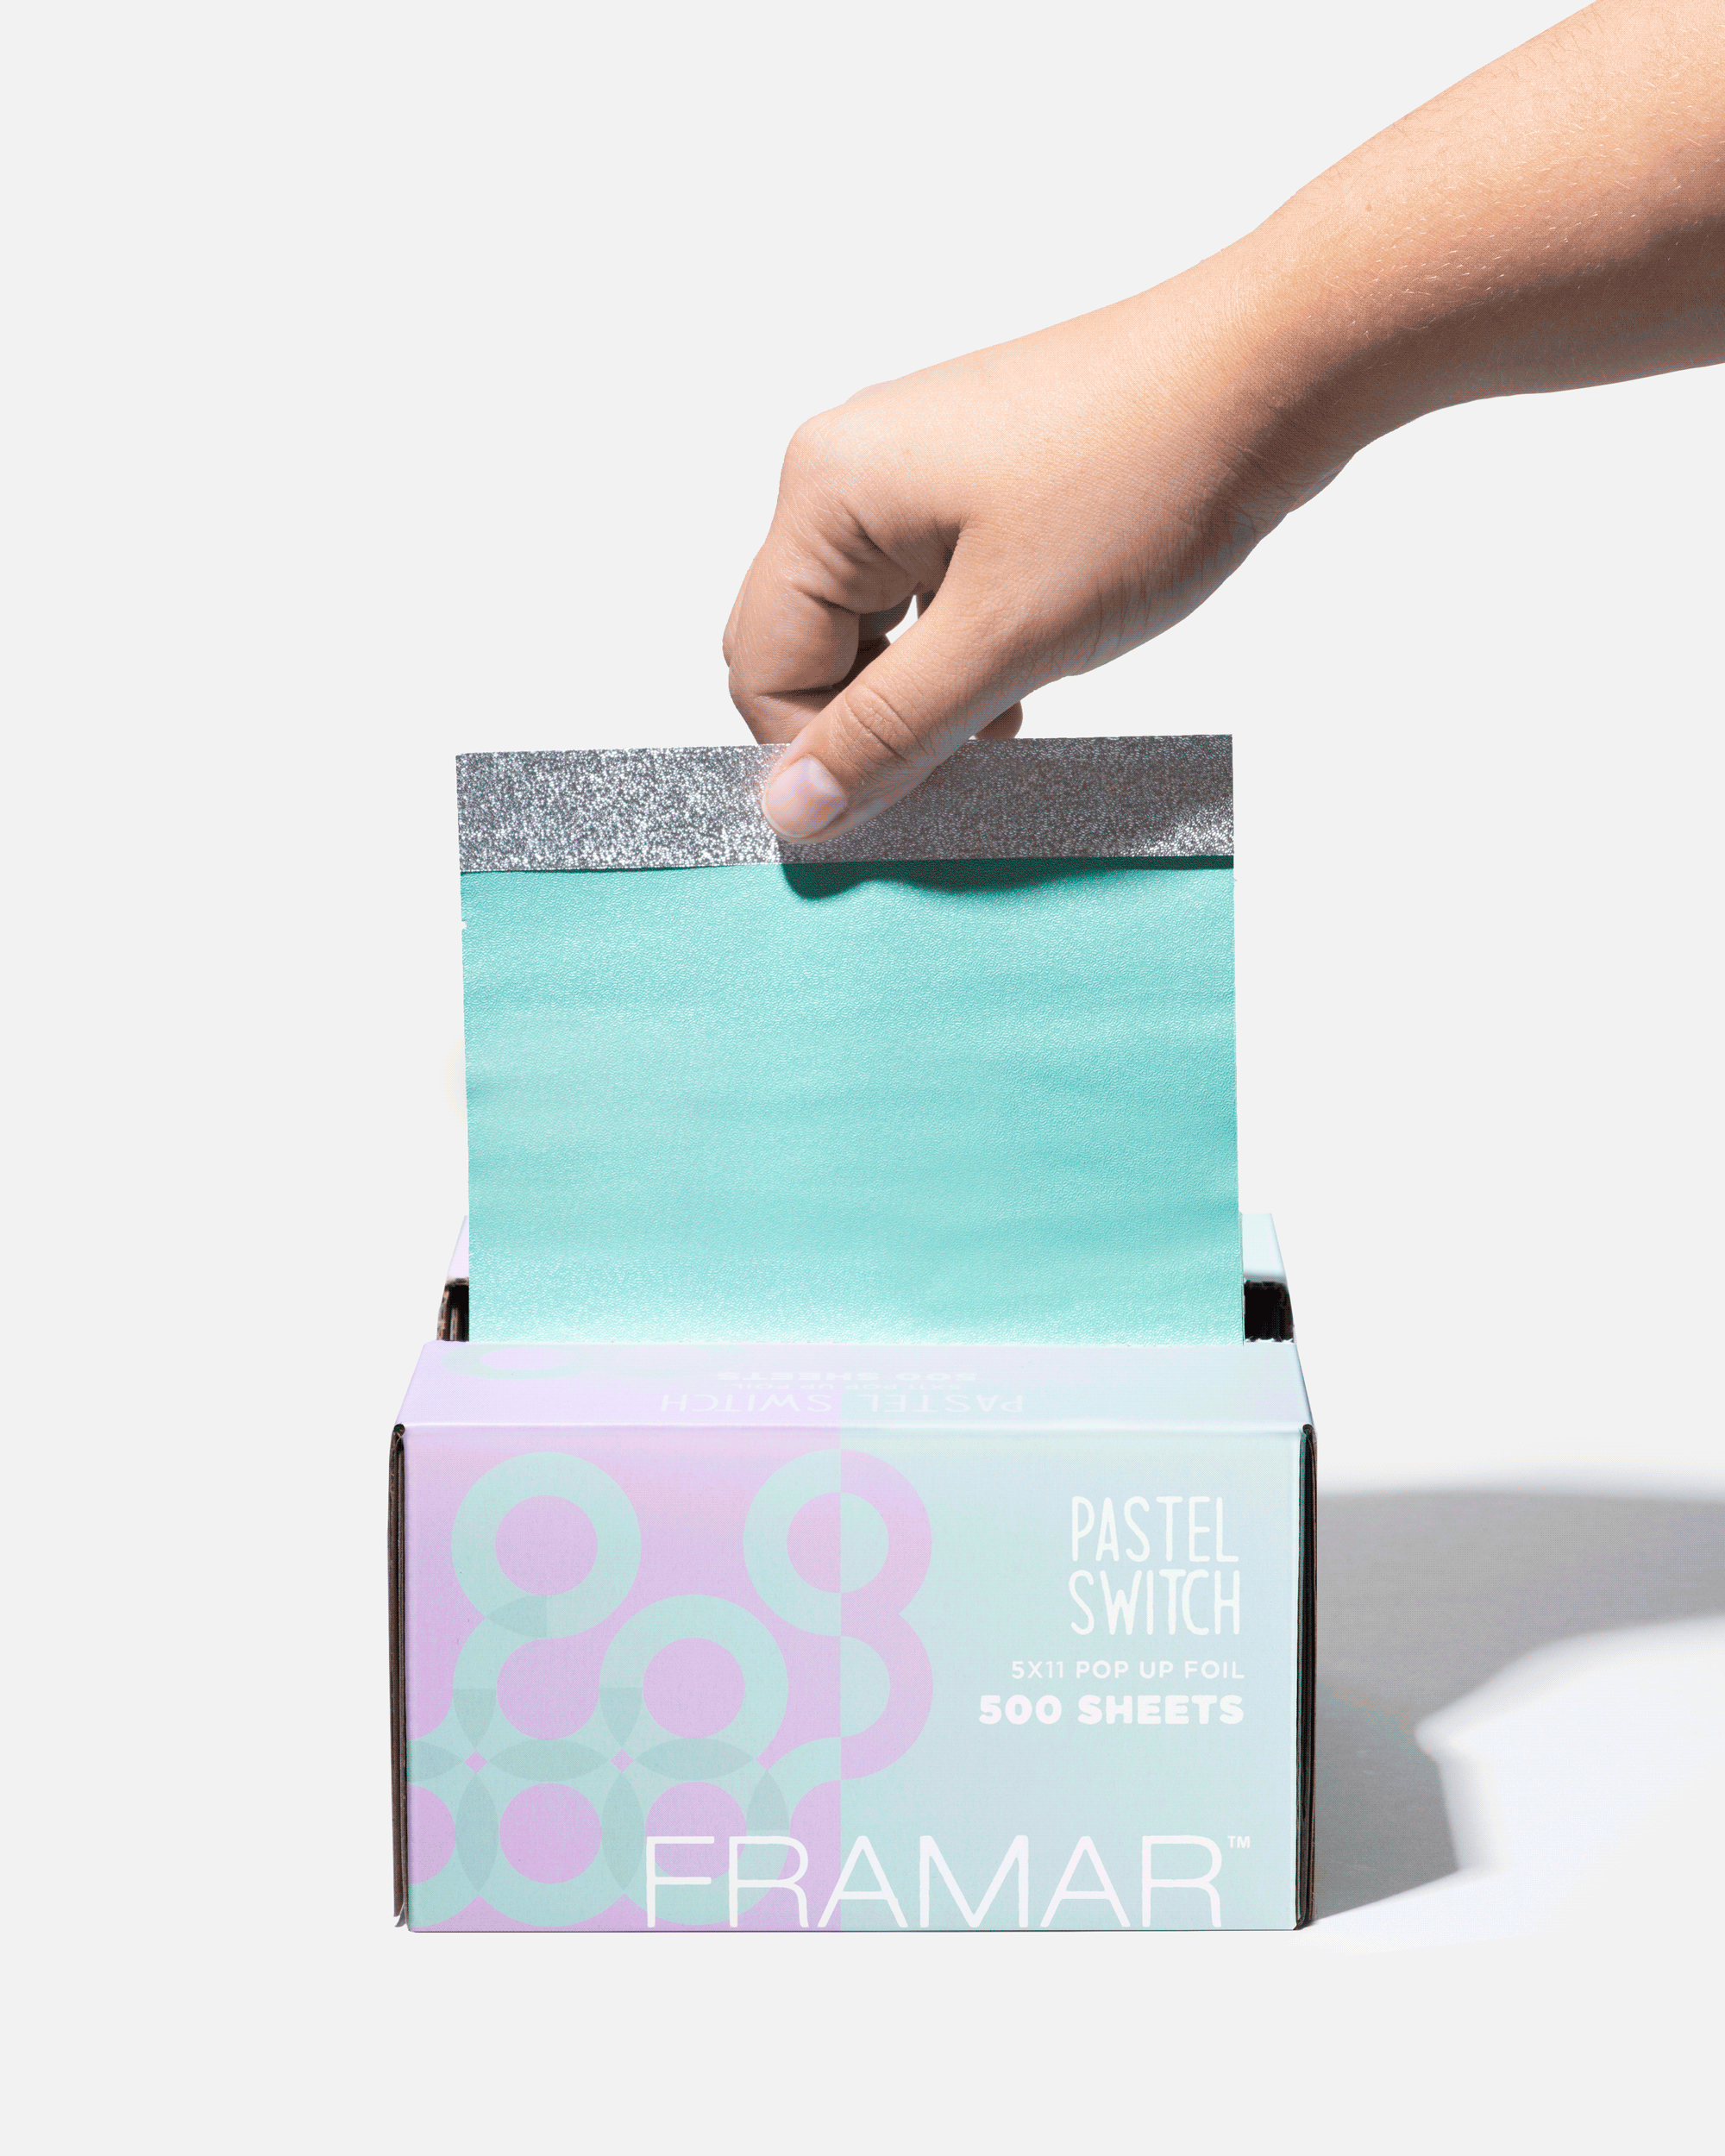 Framar Pastel Switch Pop-Up Foil, Foils, Film & Meche